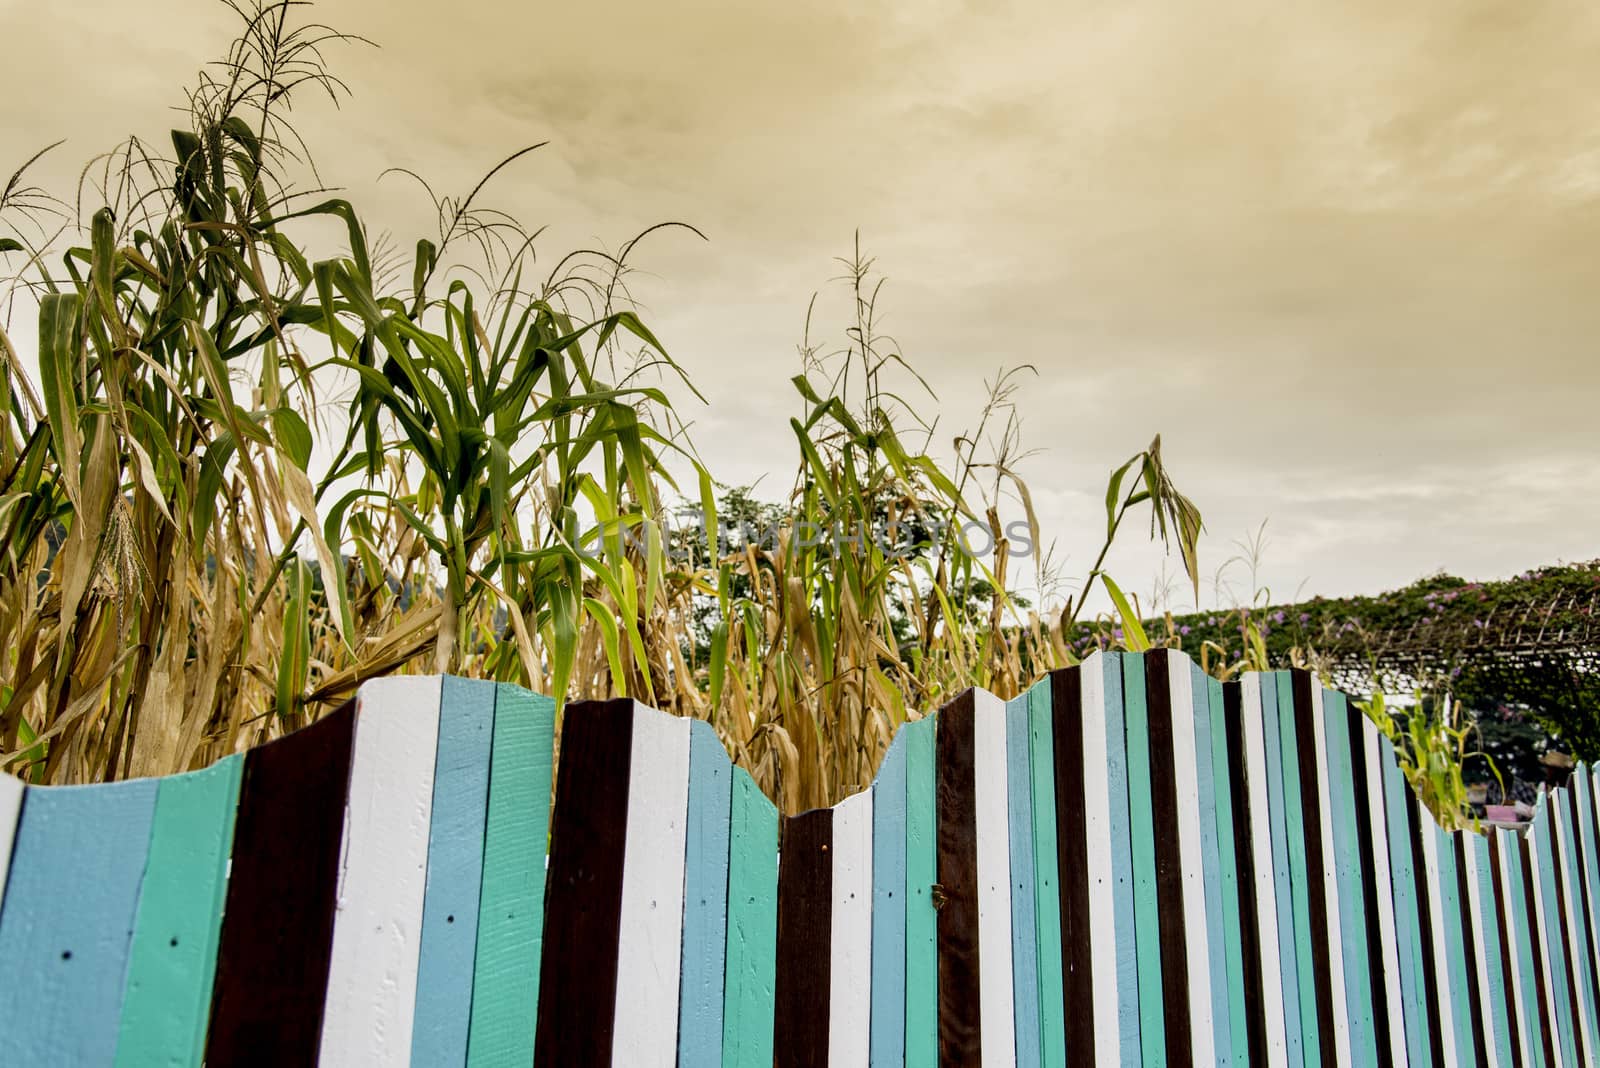 Corn field with colorful wooden fence2 by gjeerawut